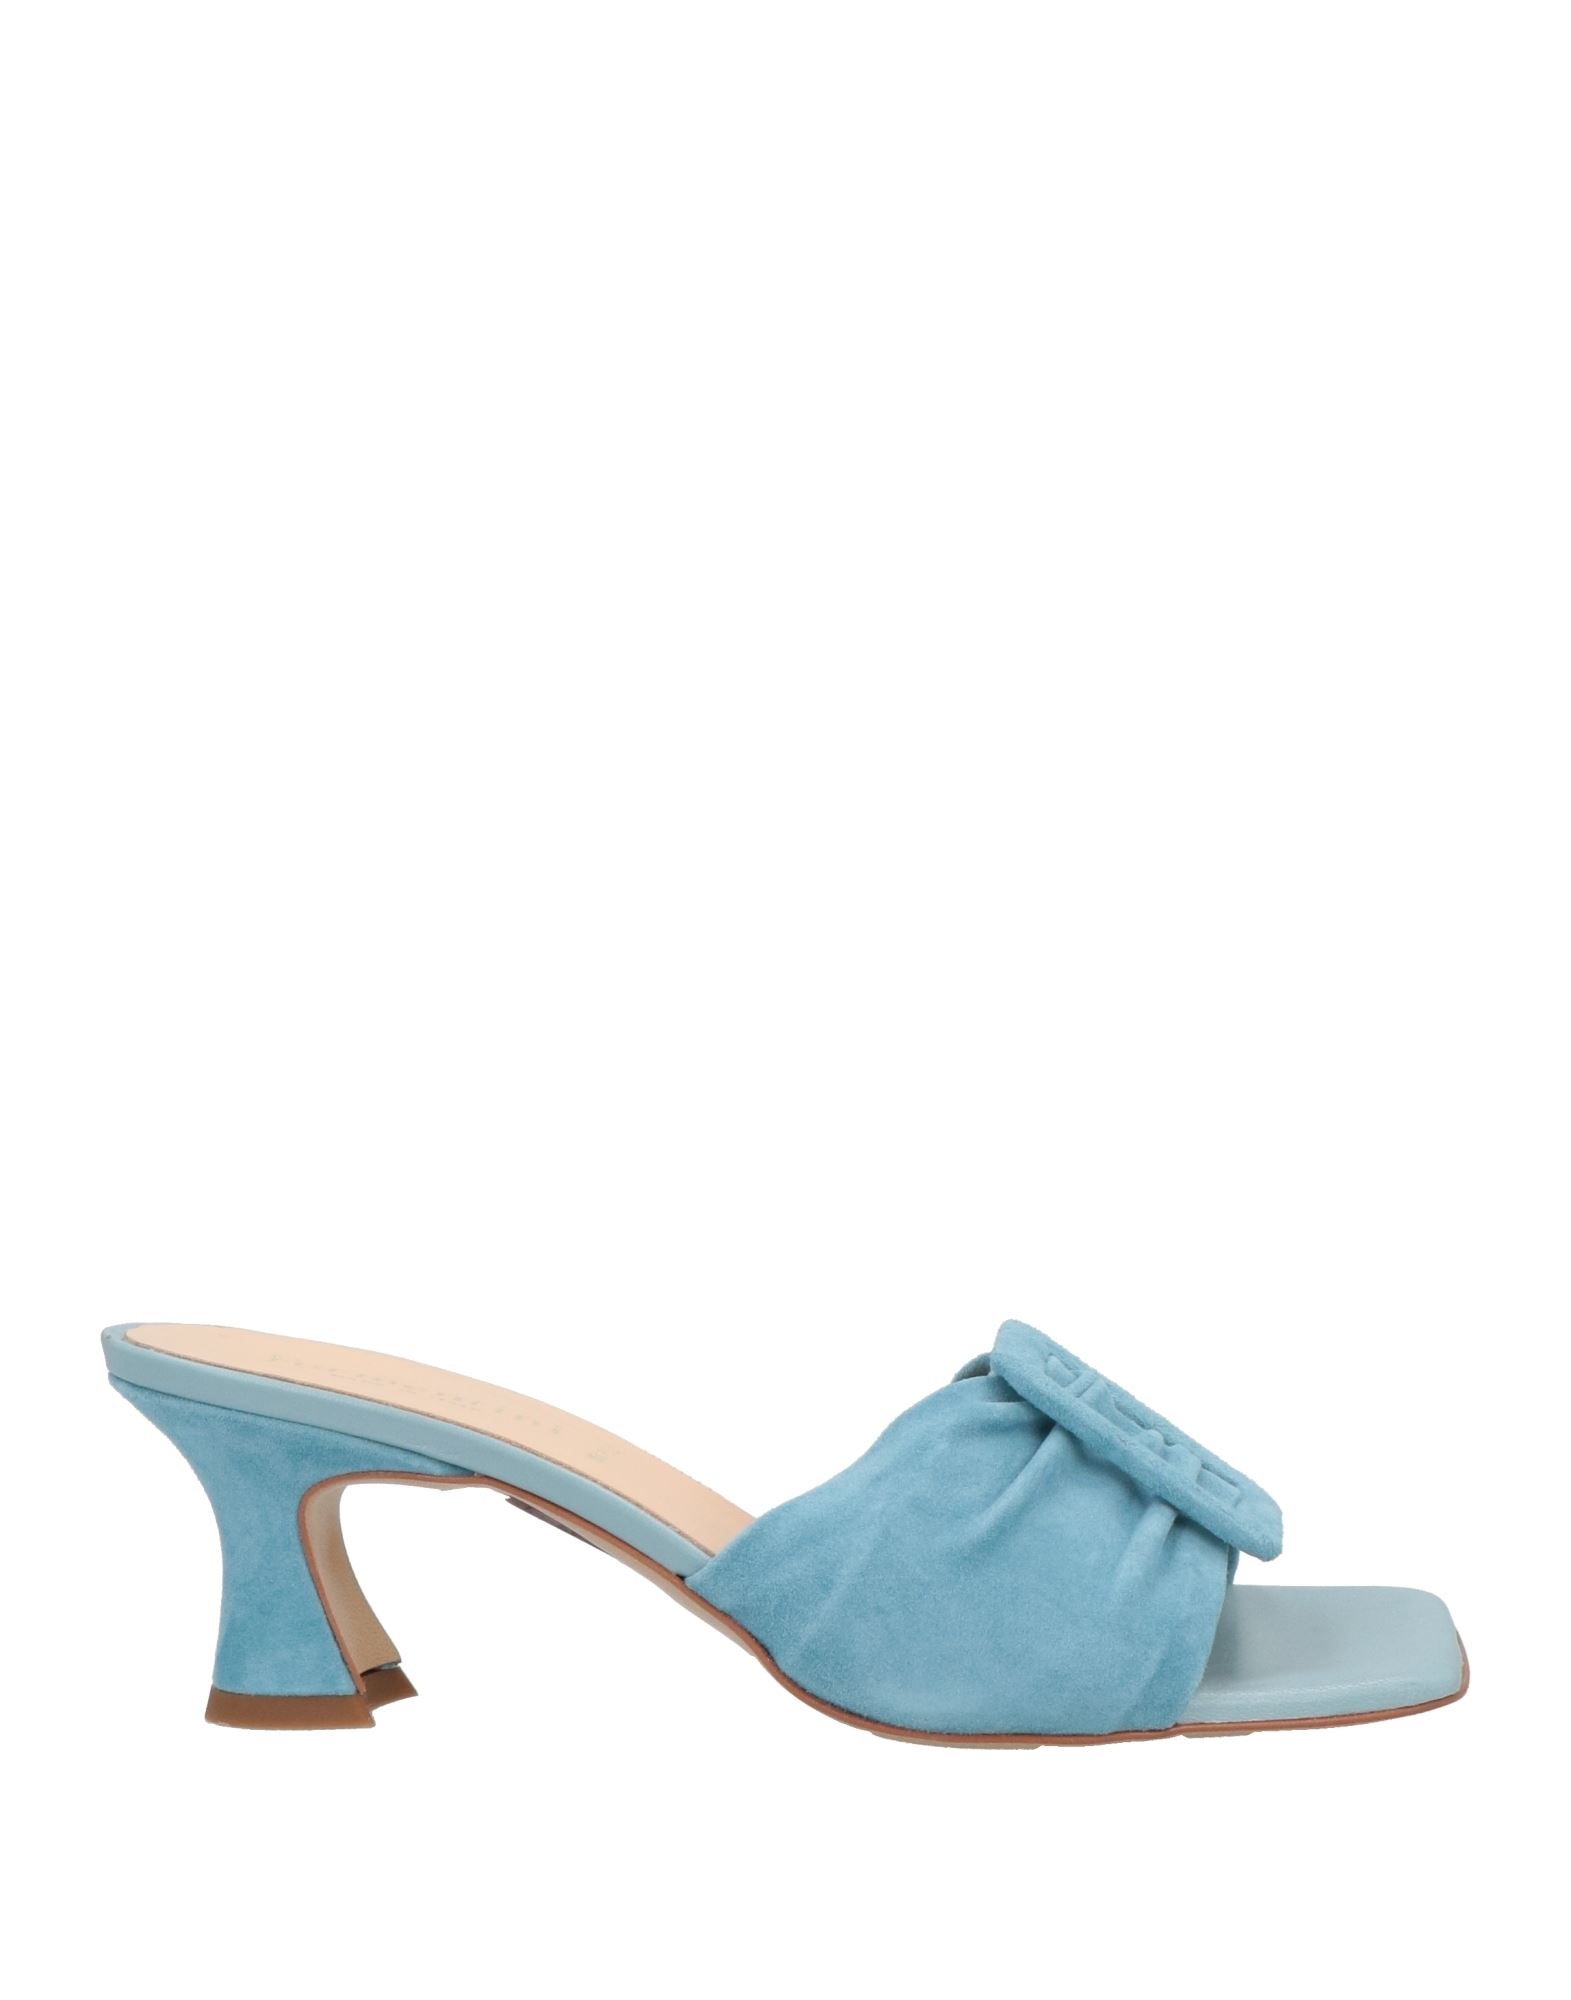 Formentini Sandals In Blue